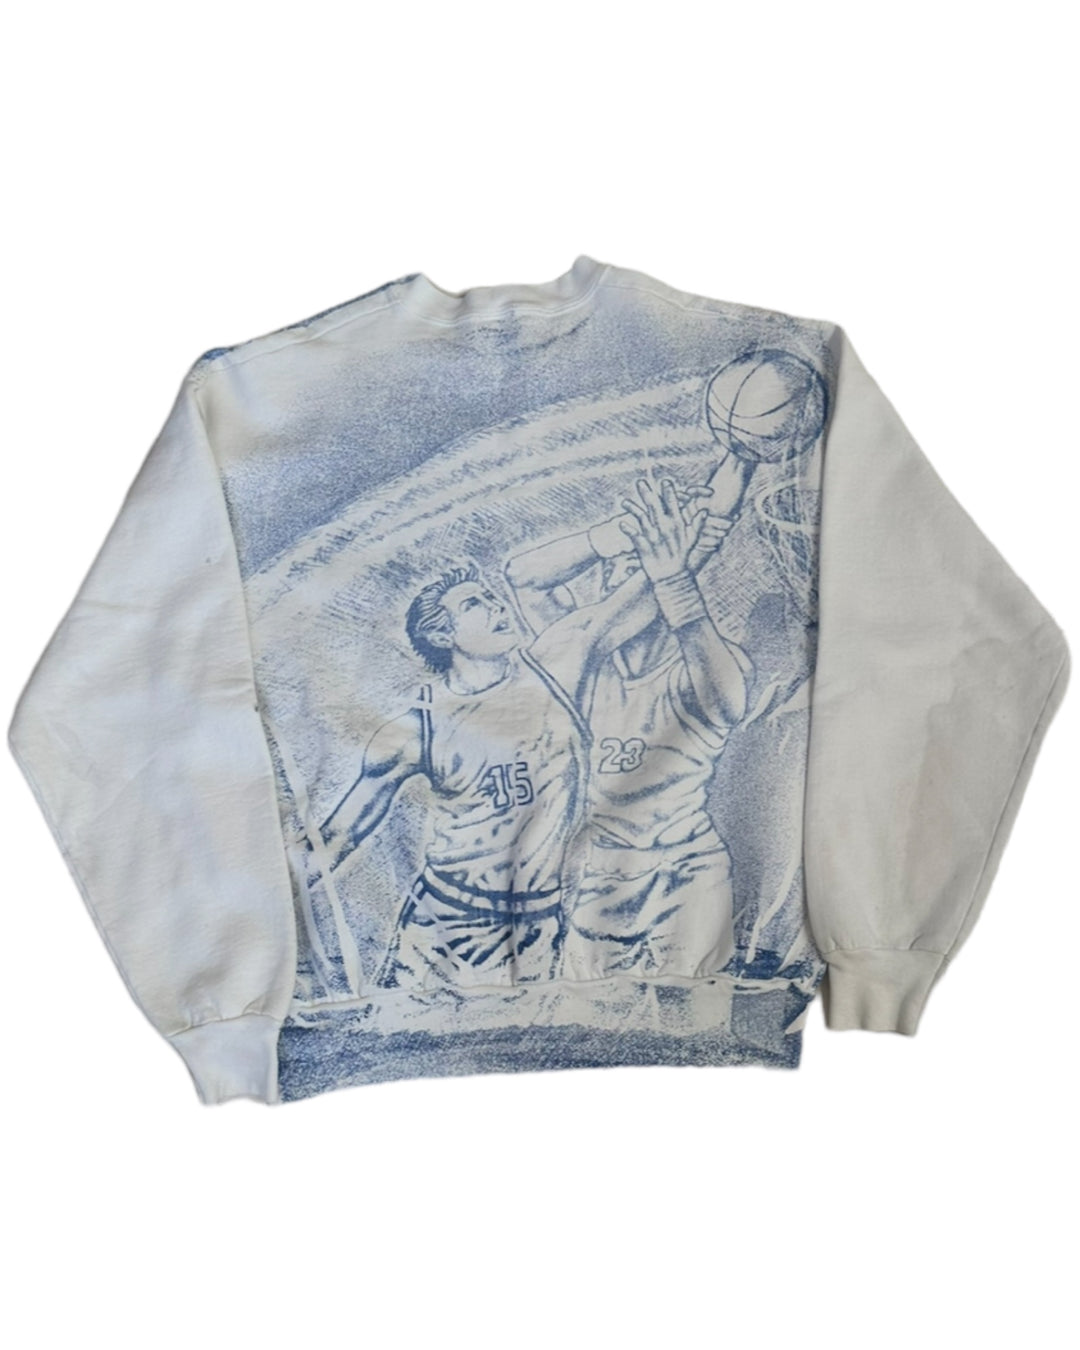 Duke Rare Vintage Sweatshirt